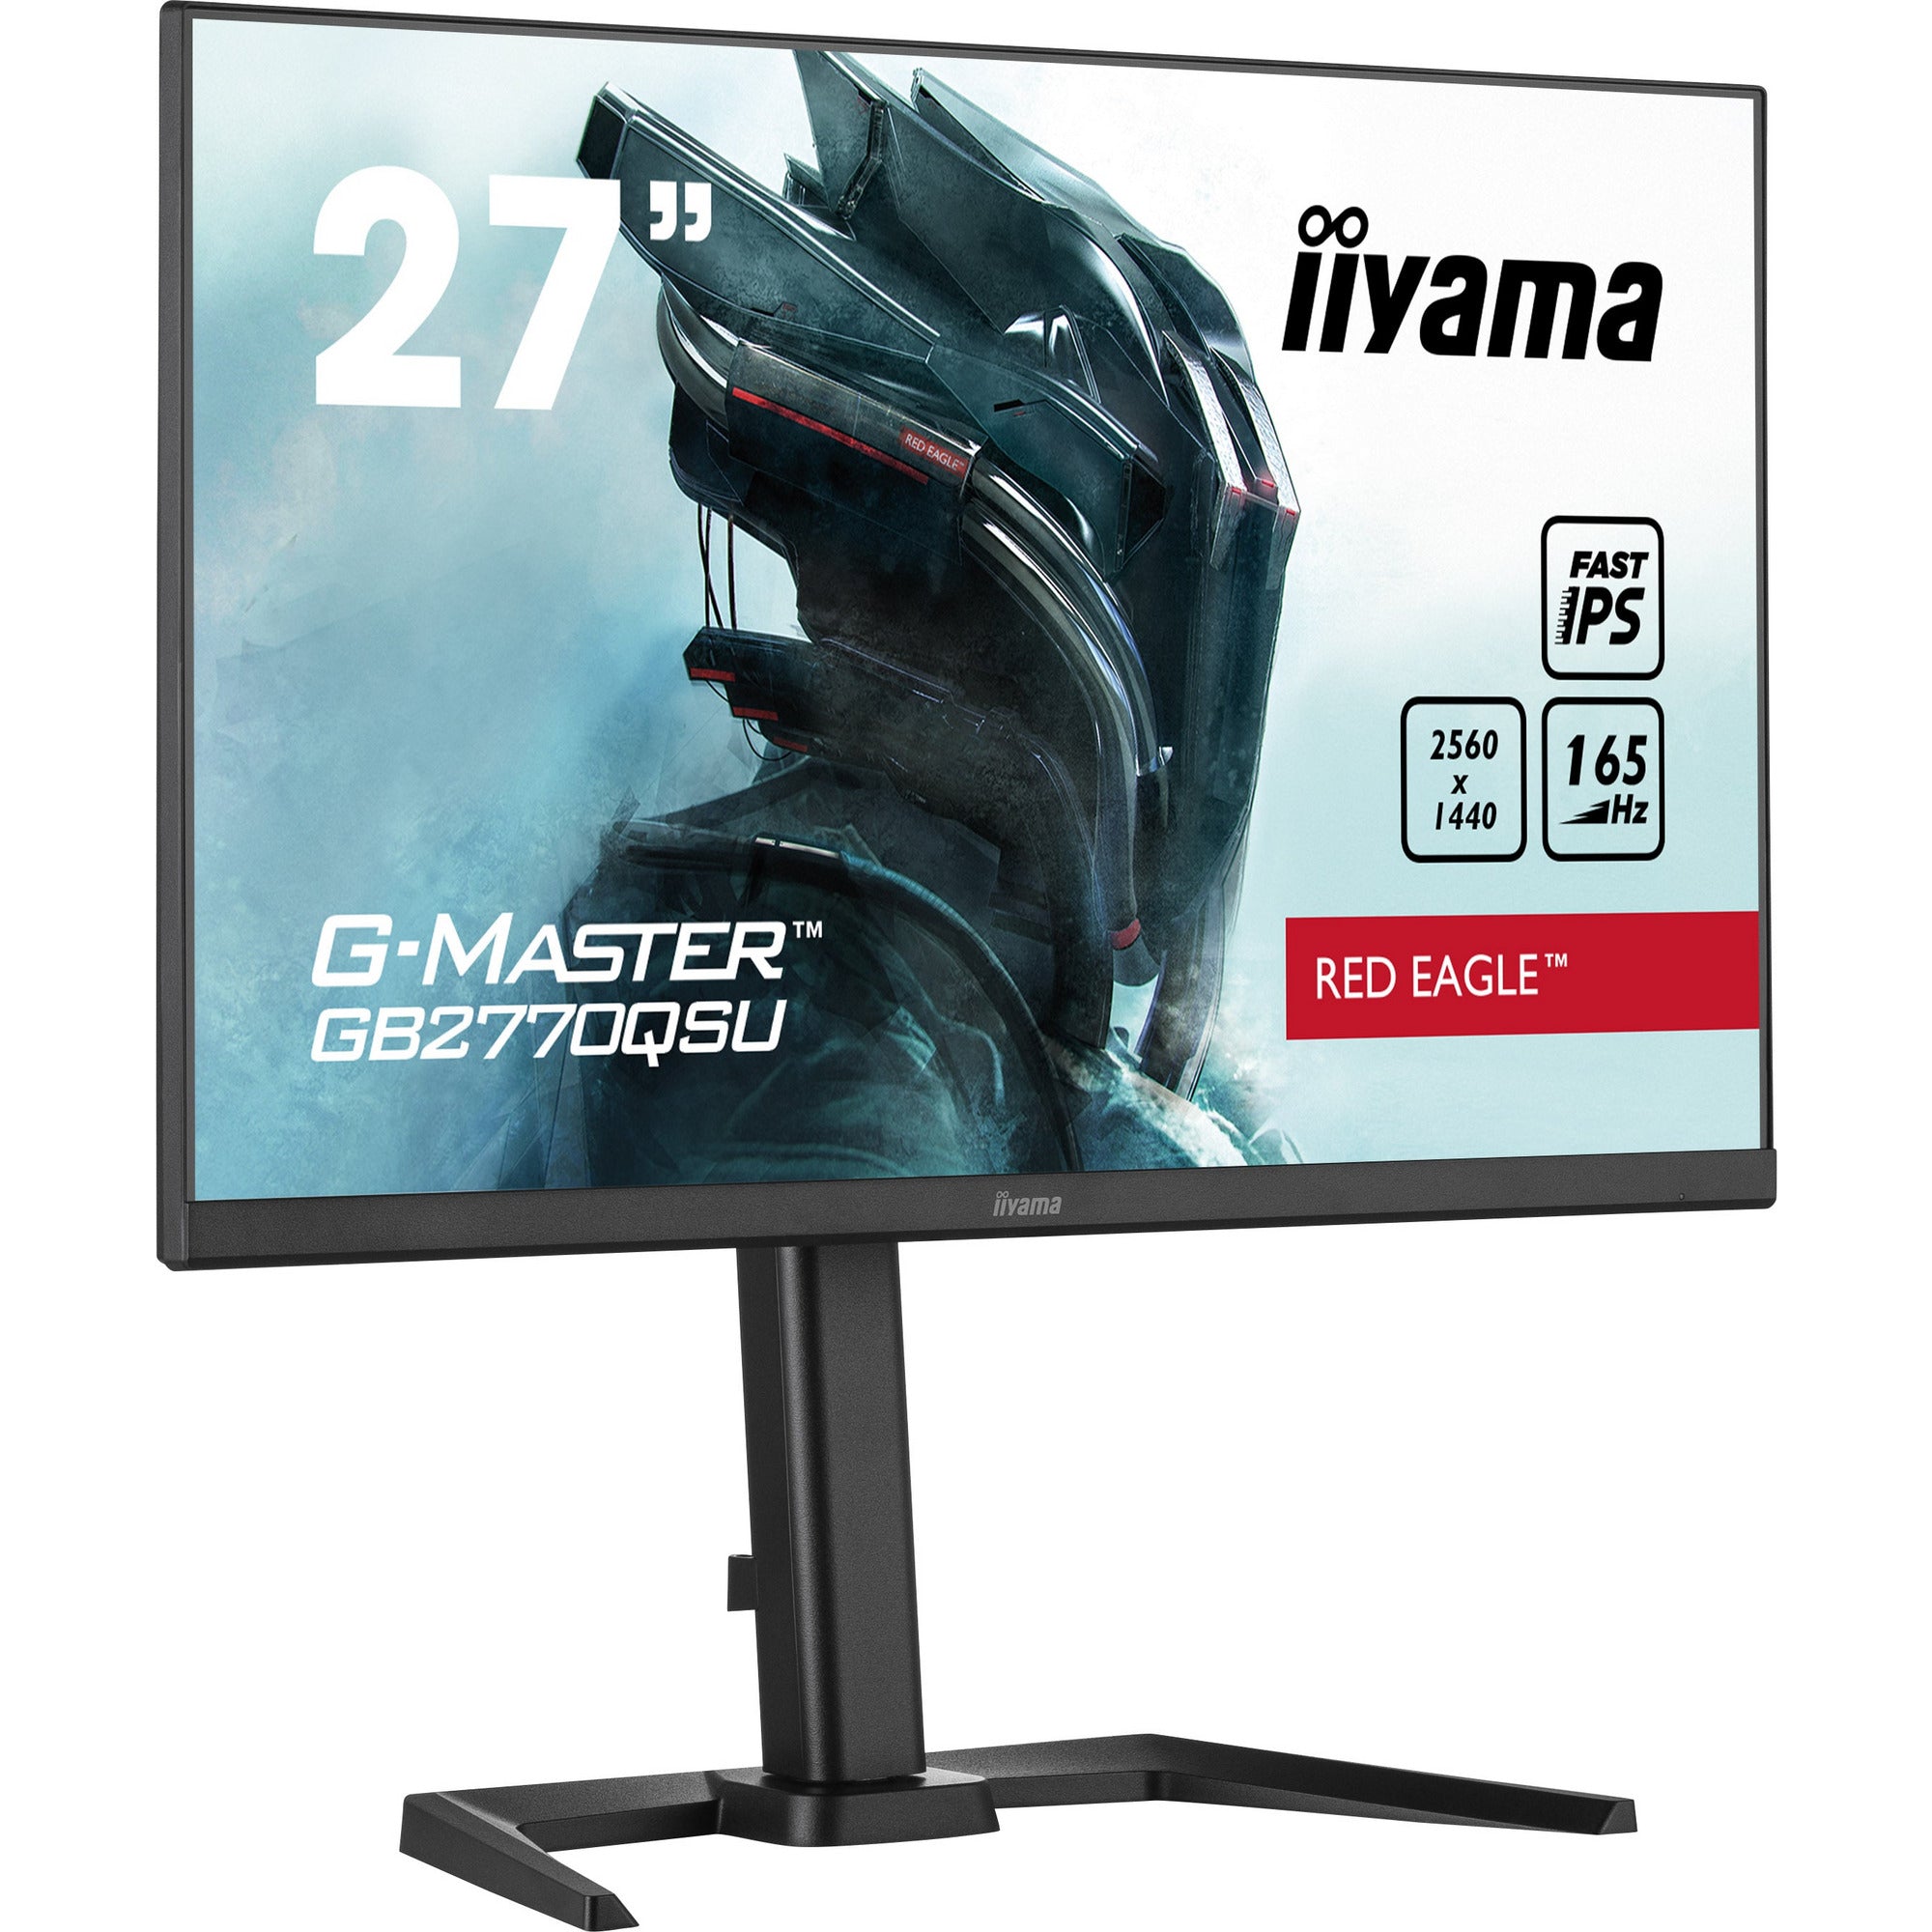 iiyama G-Master GB2770QSU-B5 27" Fast IPS WQHD 2560 x 1400 Red Eagle Gaming Monitor